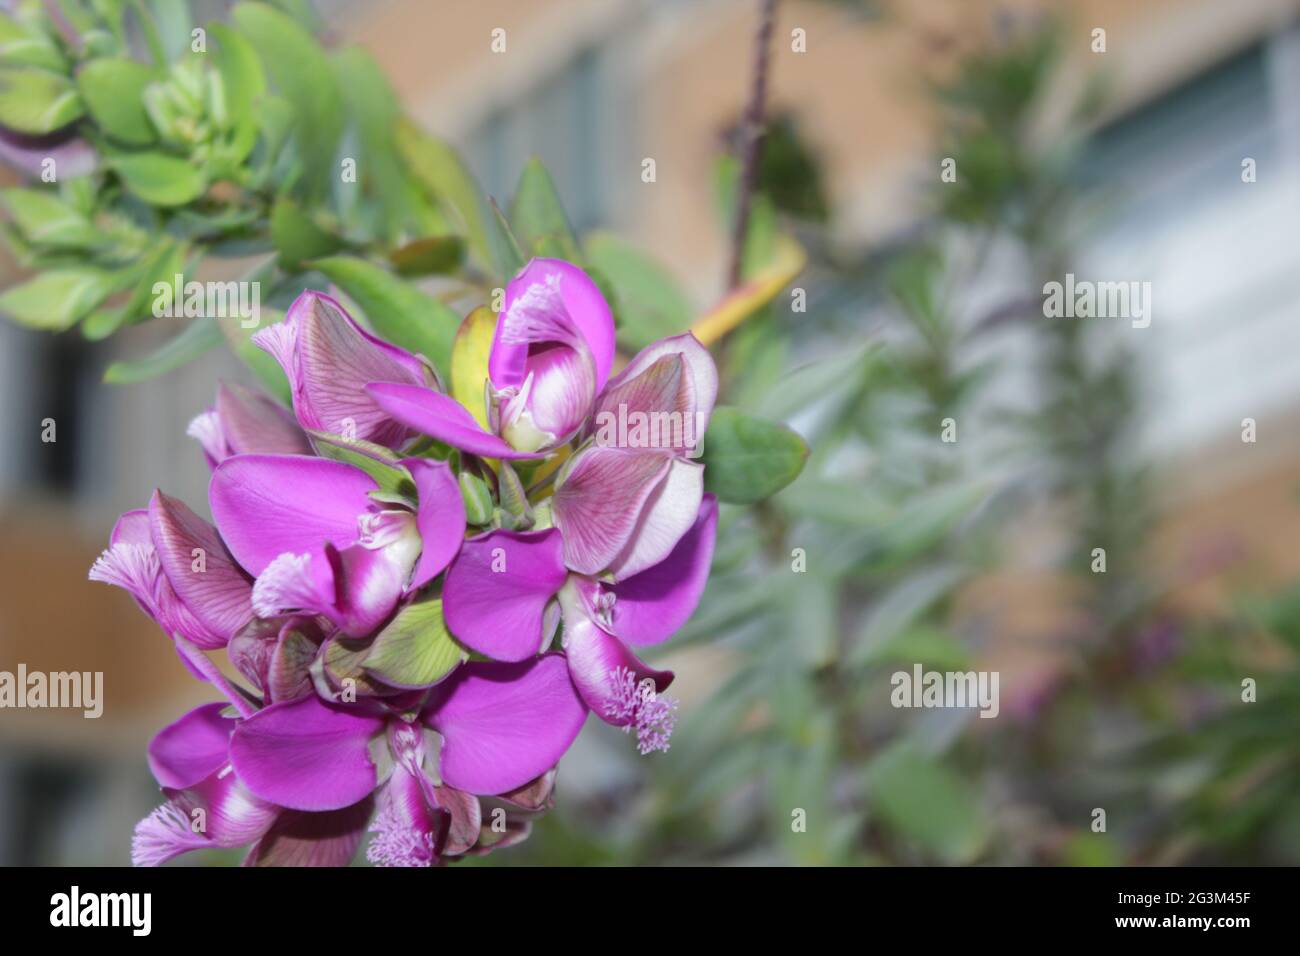 Wild medicinal plants purple flowers Stock Photo